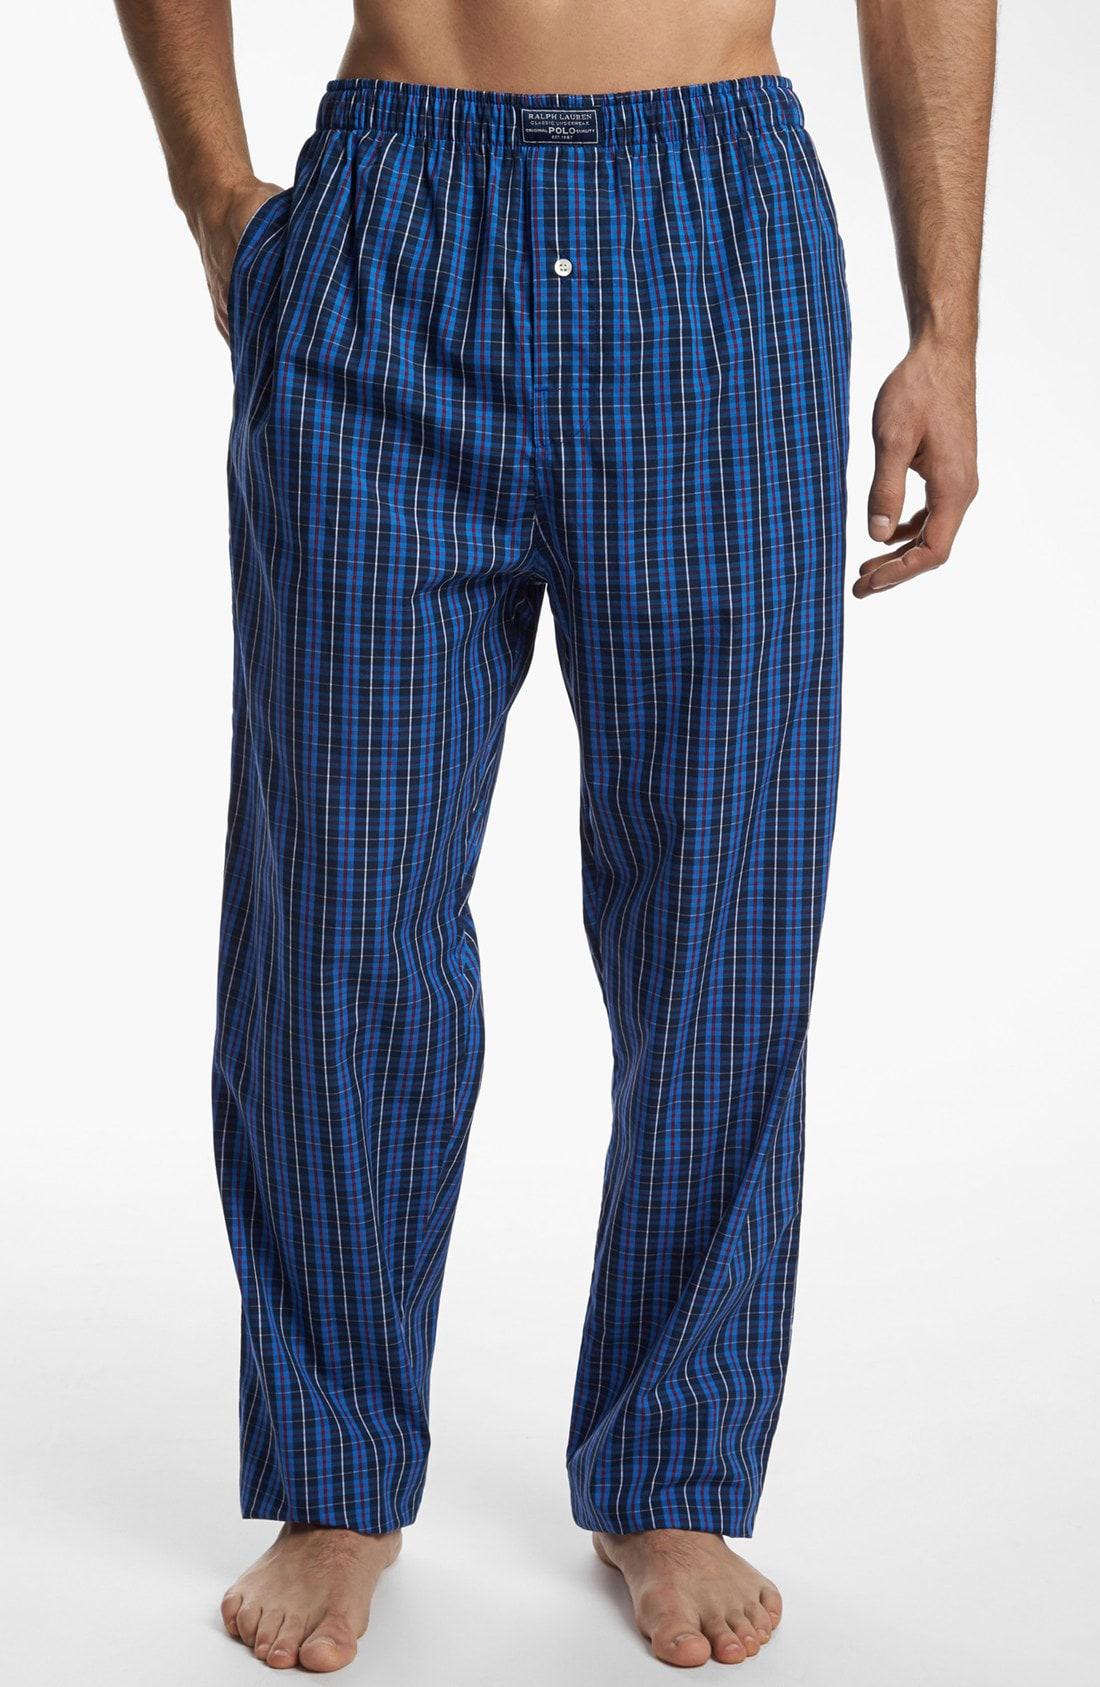 Lyst - Polo Ralph Lauren Woven Pajama Pants in Blue for Men